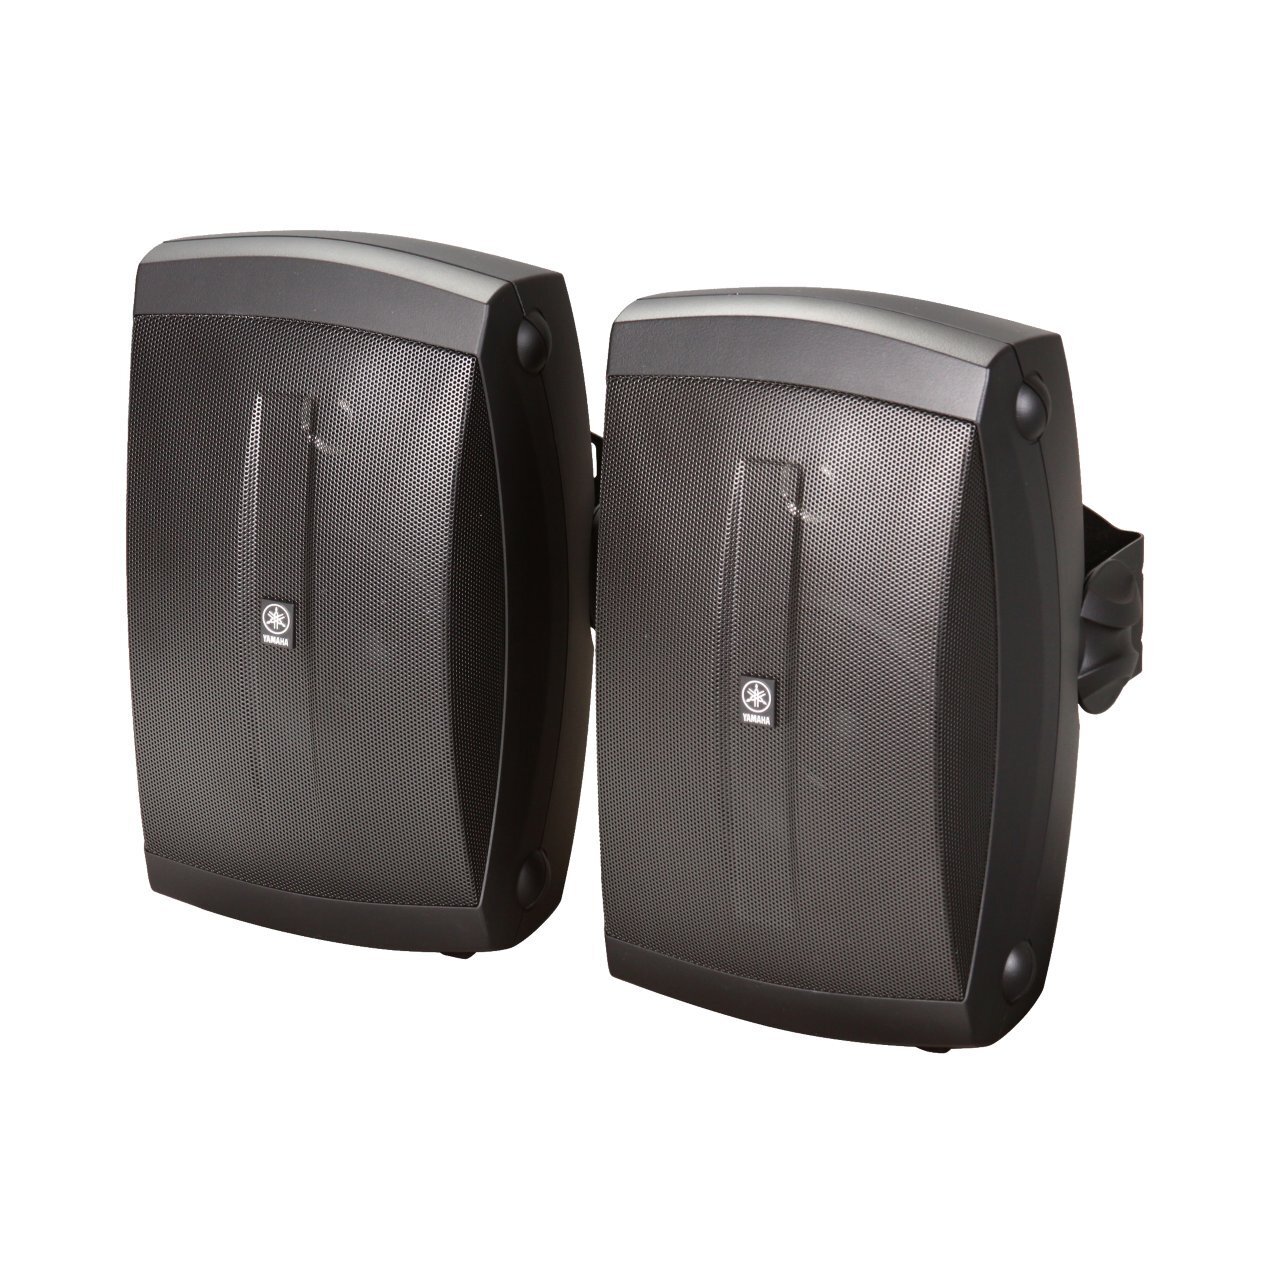 Yamaha NSAW150 Black 120 Watt Box Component Waterproof Outdoor Speakers